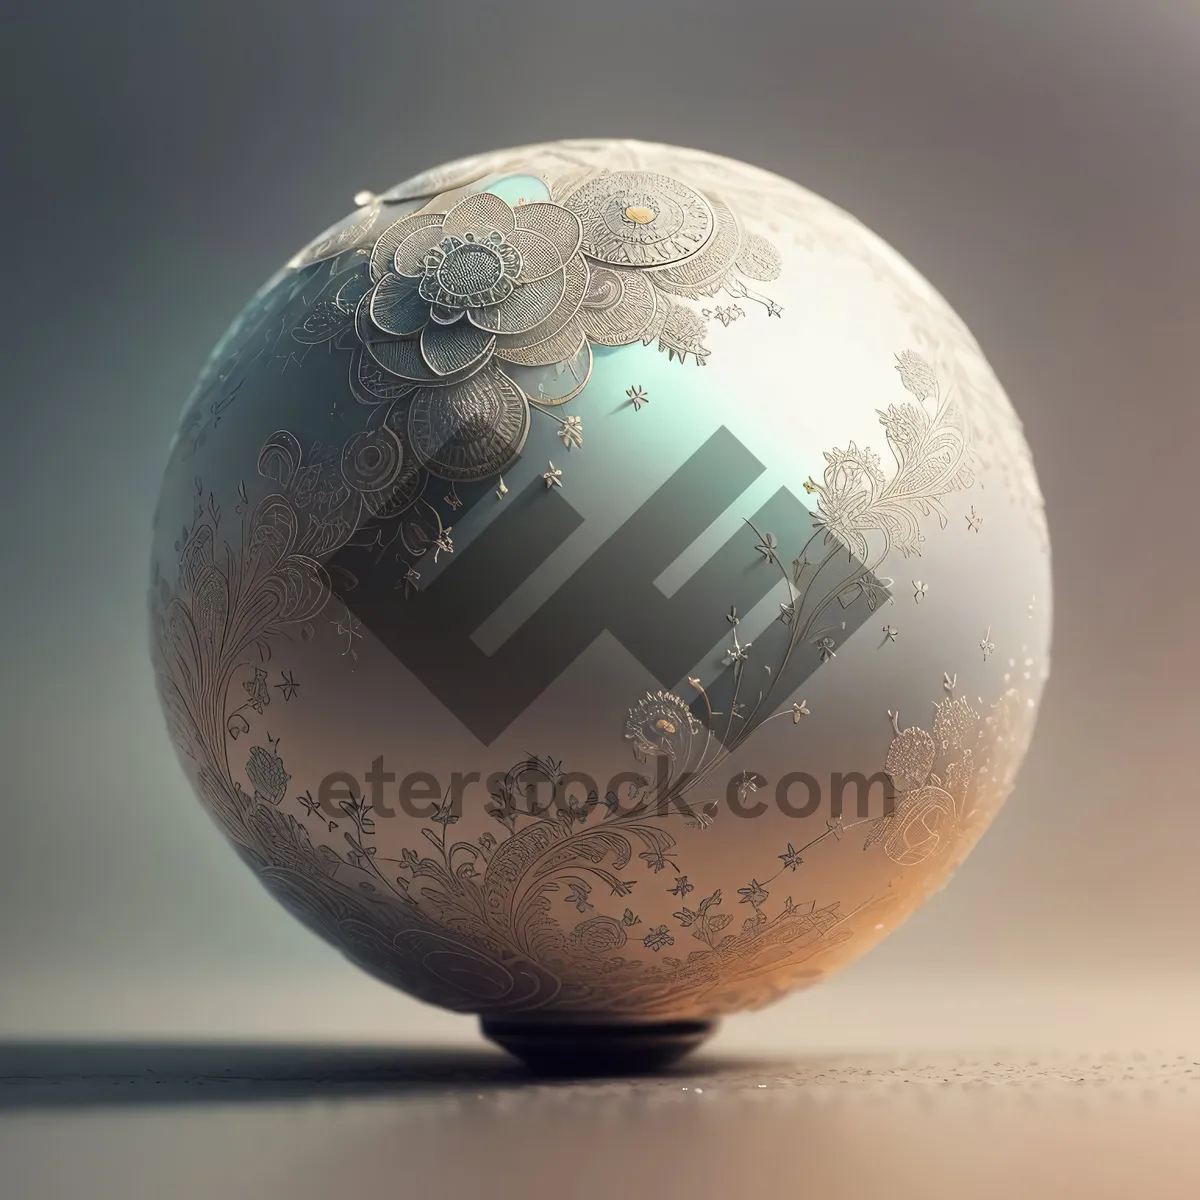 Picture of Global Earth Egg on Satellite Orbit